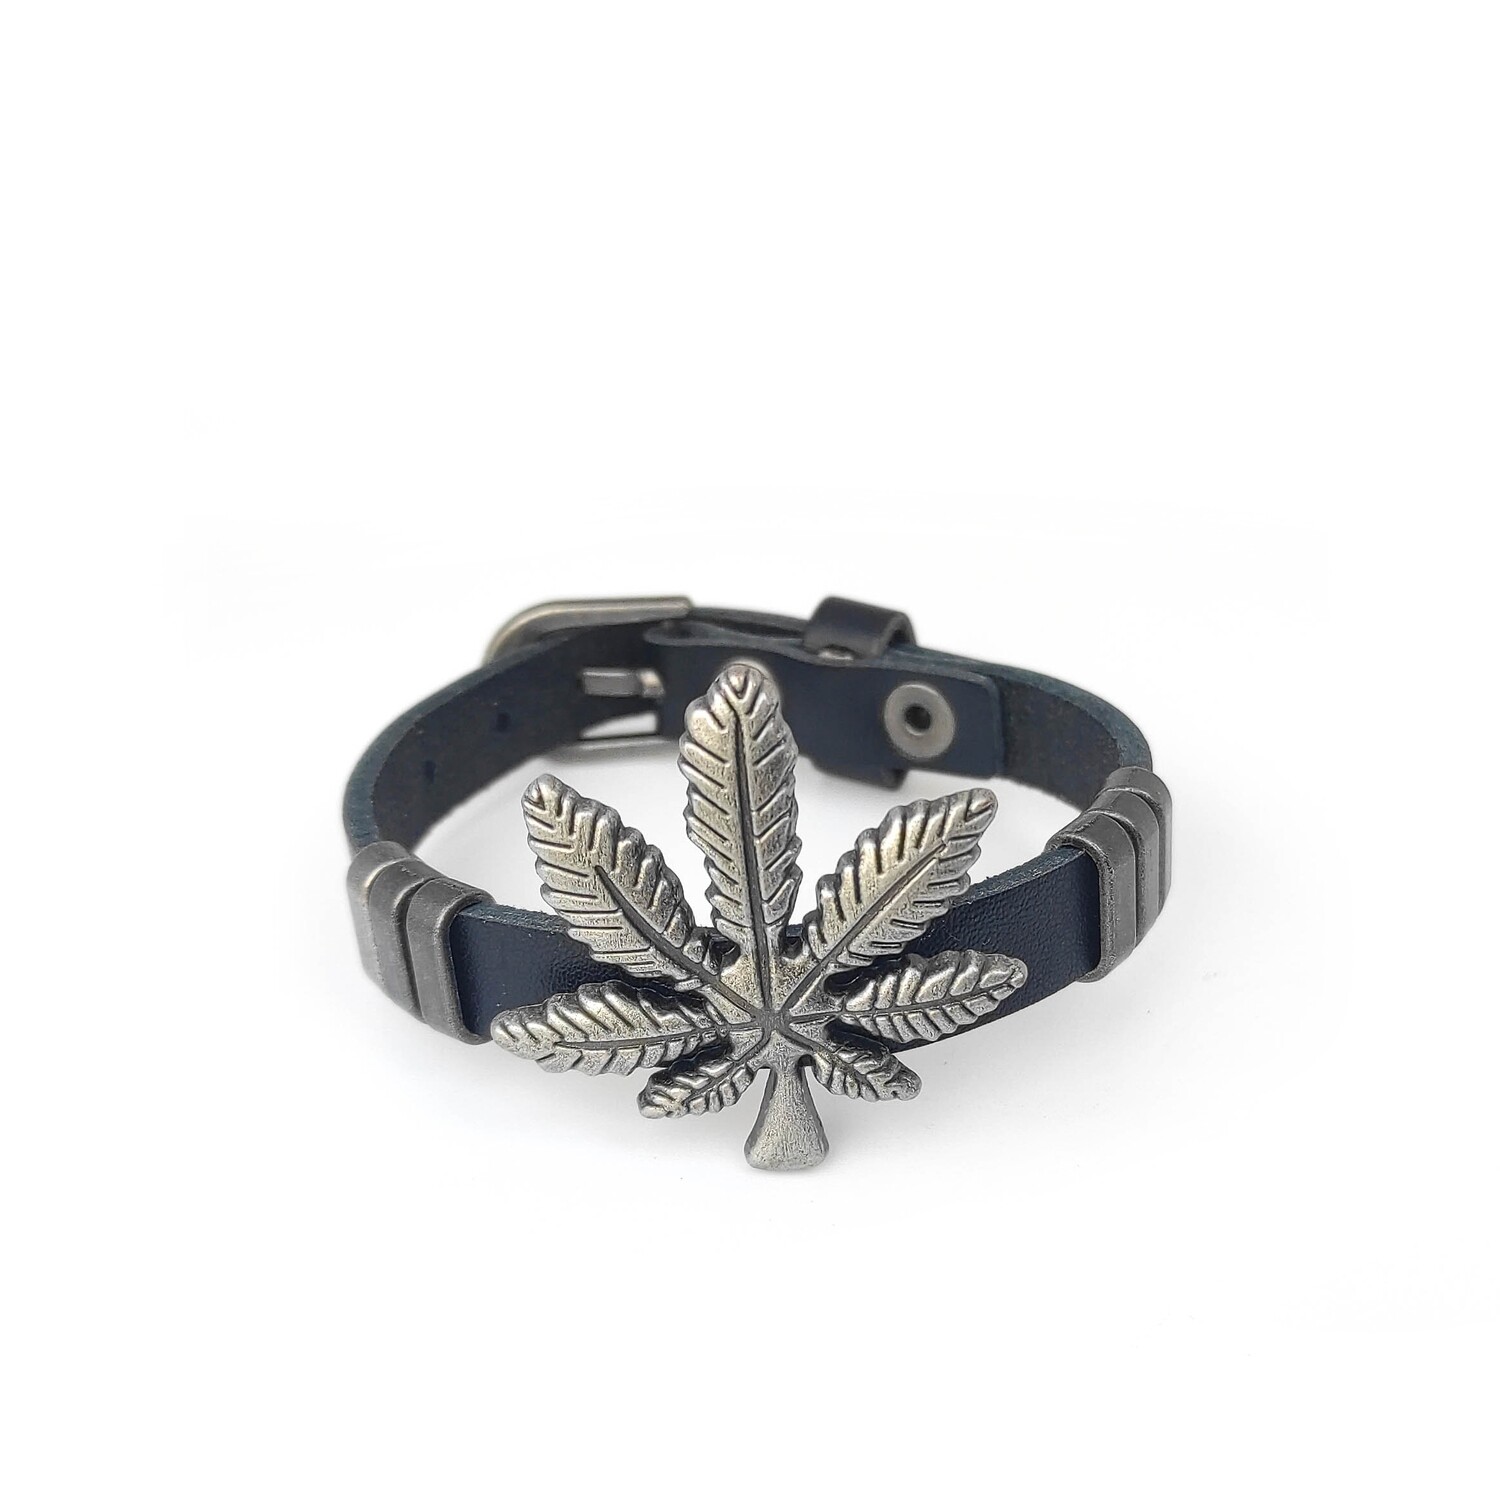 Adjustable cannabis bracelet